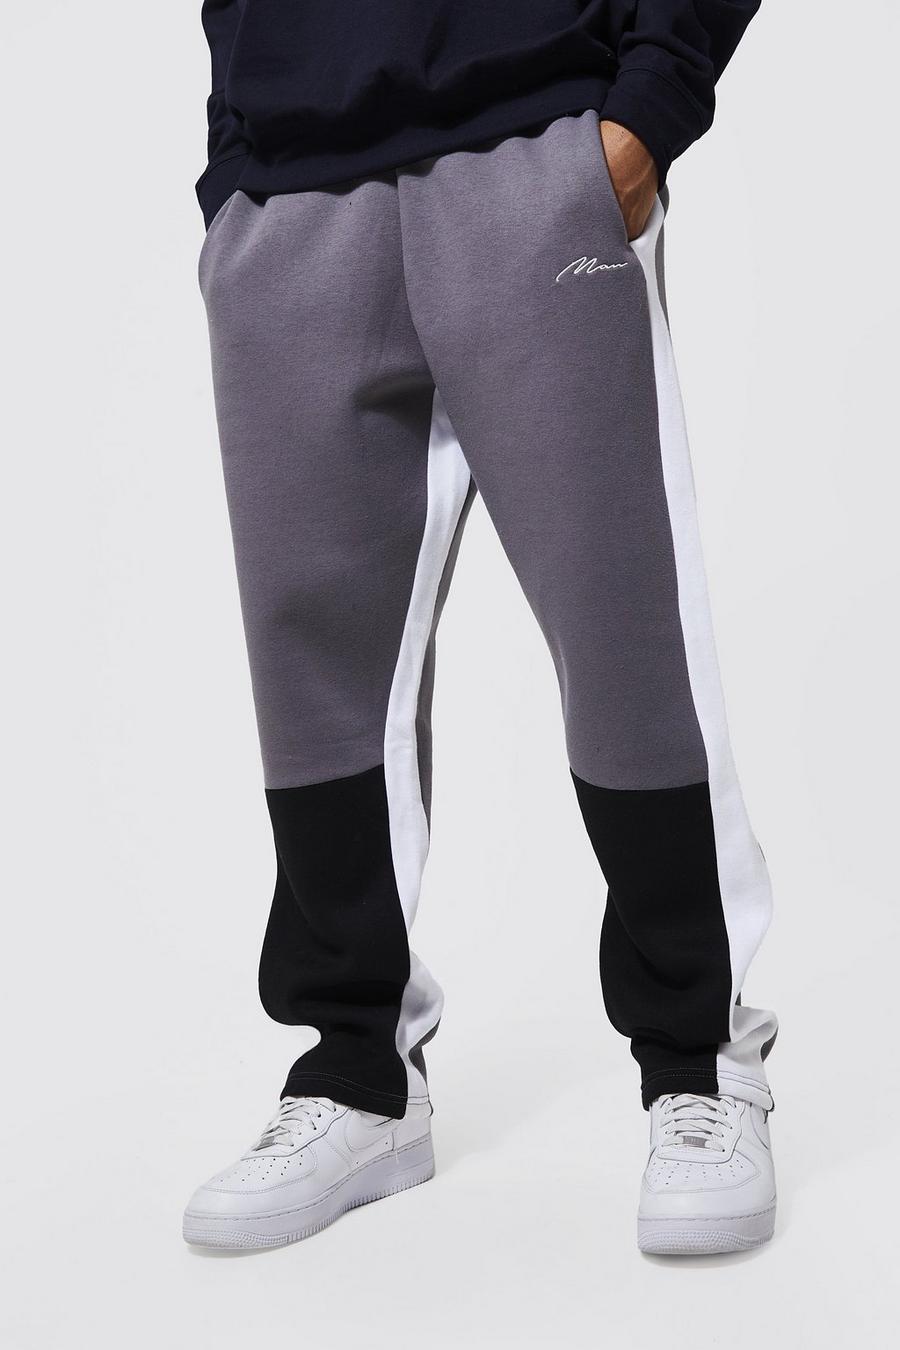 Colorblock Jogginghose mit weitem Bein, Charcoal grey